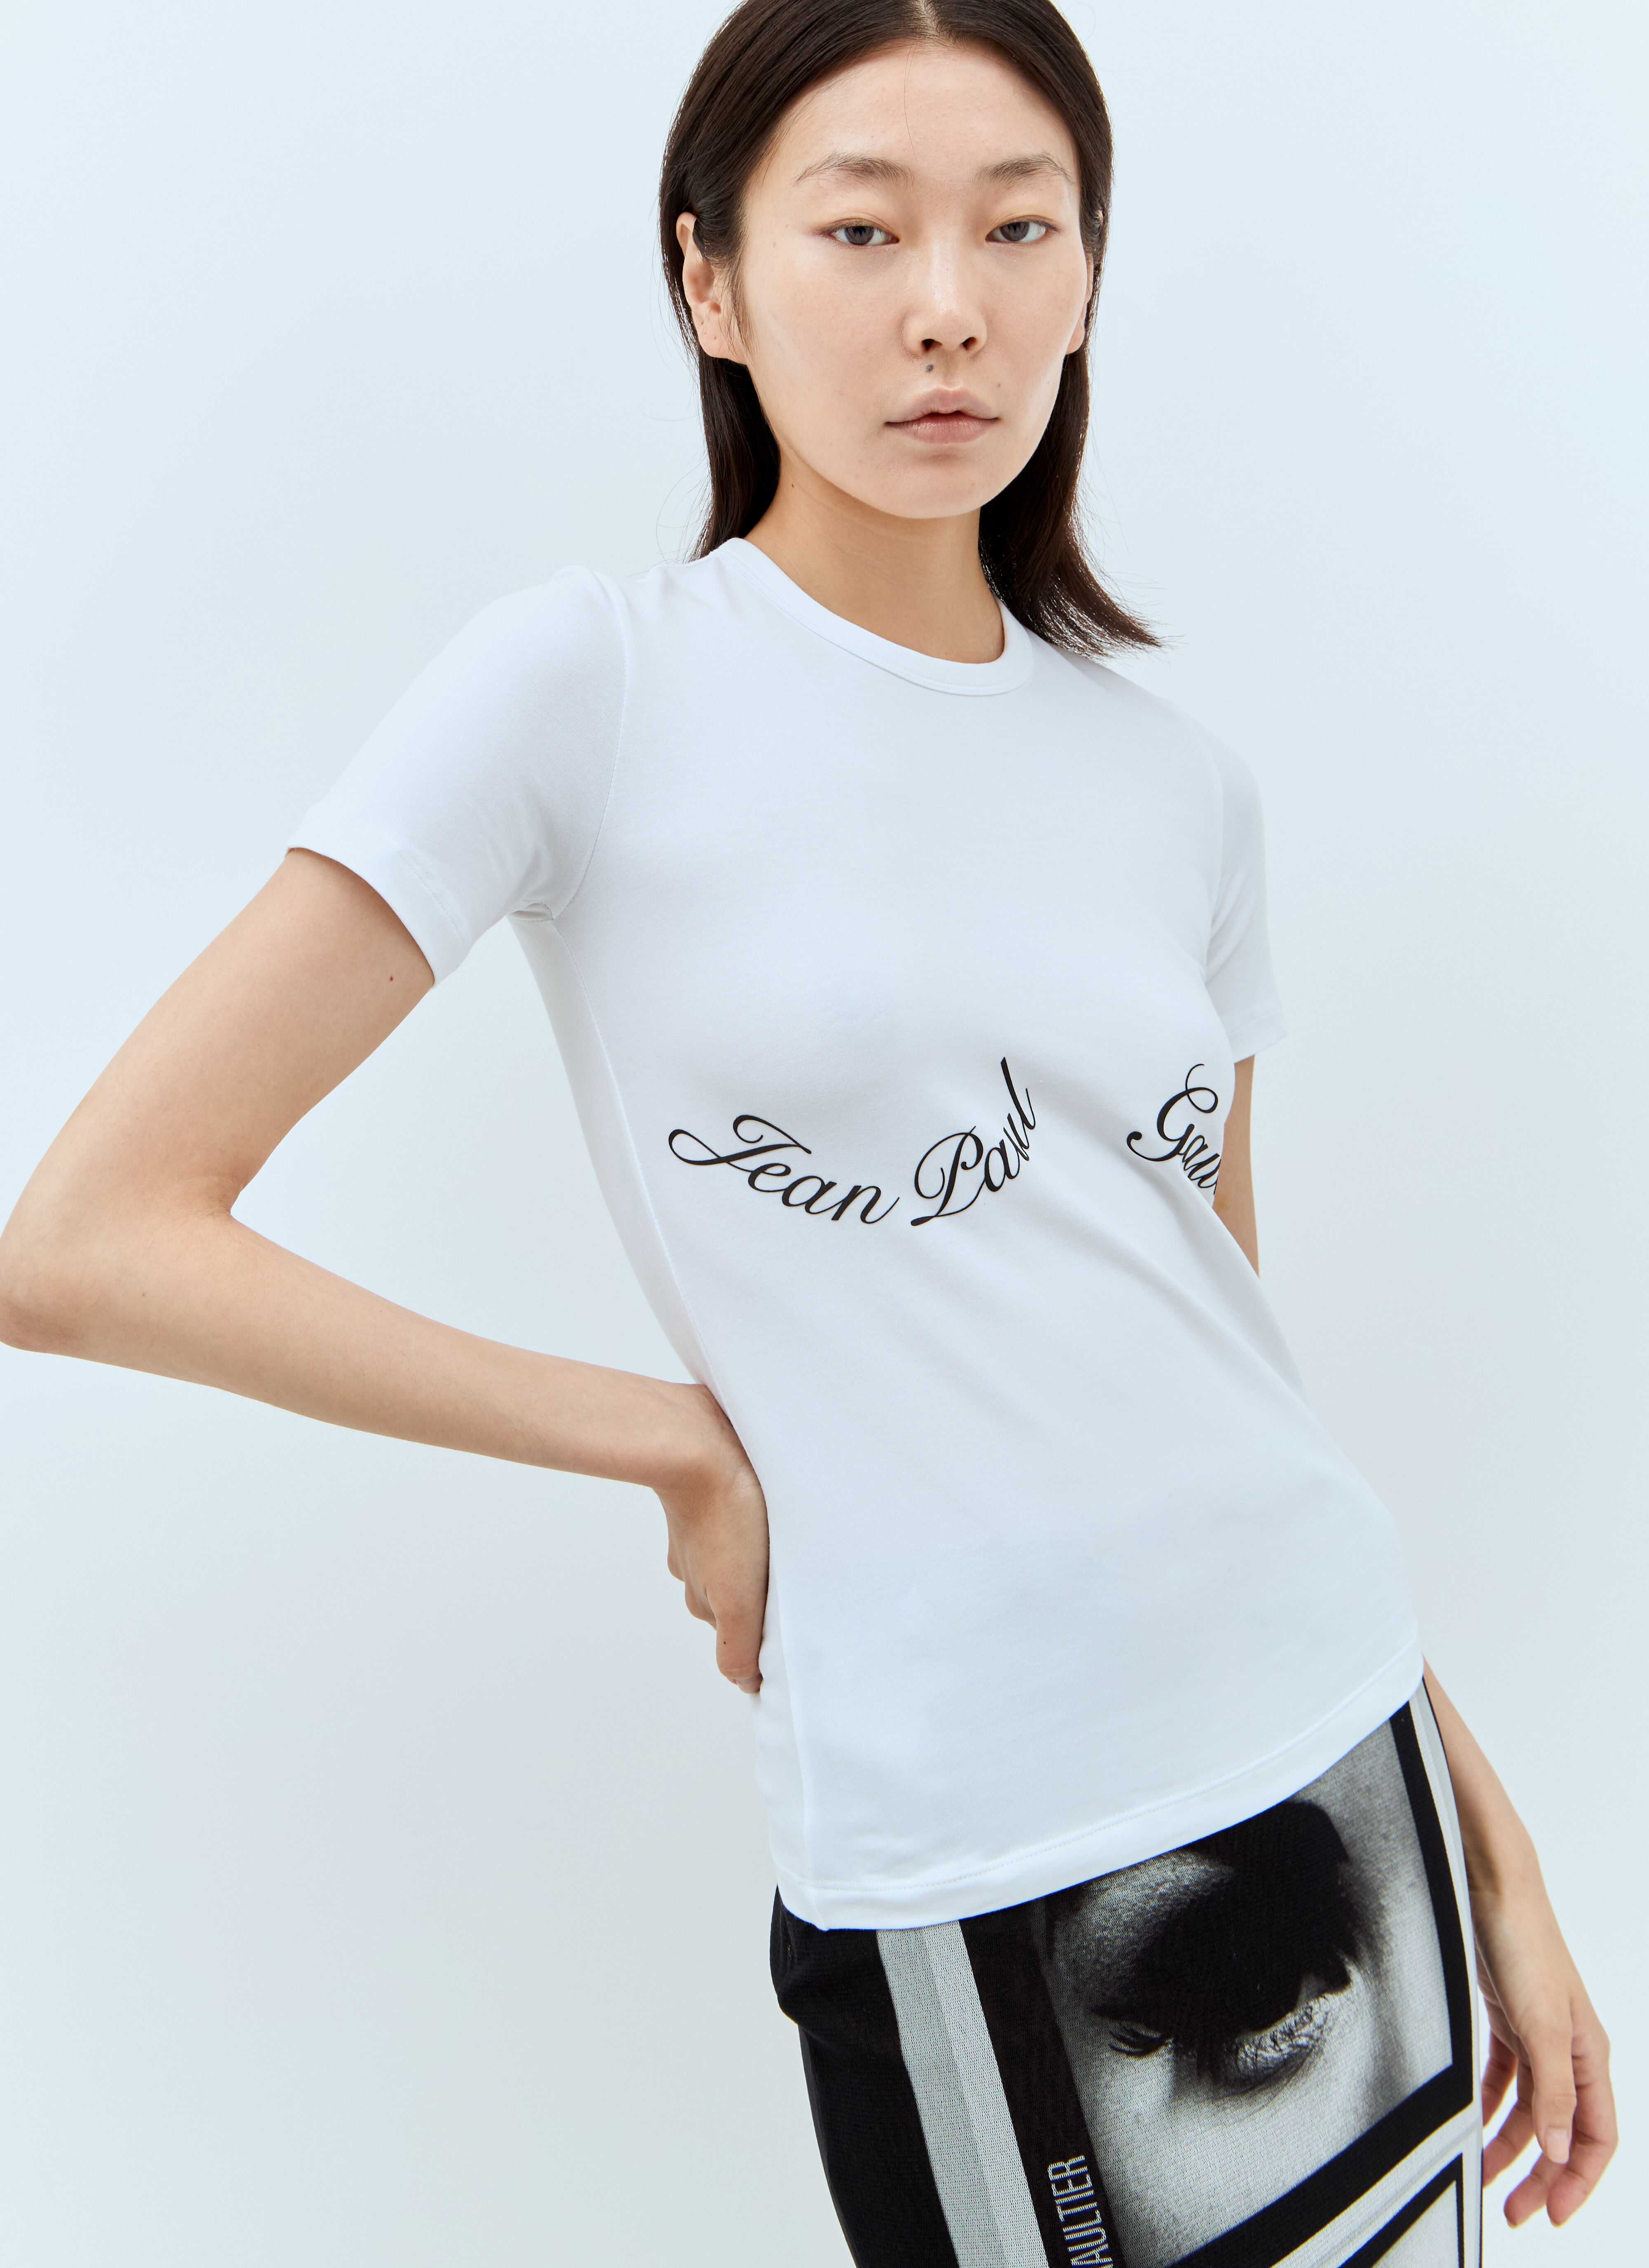 Jean Paul Gaultier Logo Print T-Shirt Black jpg0258007